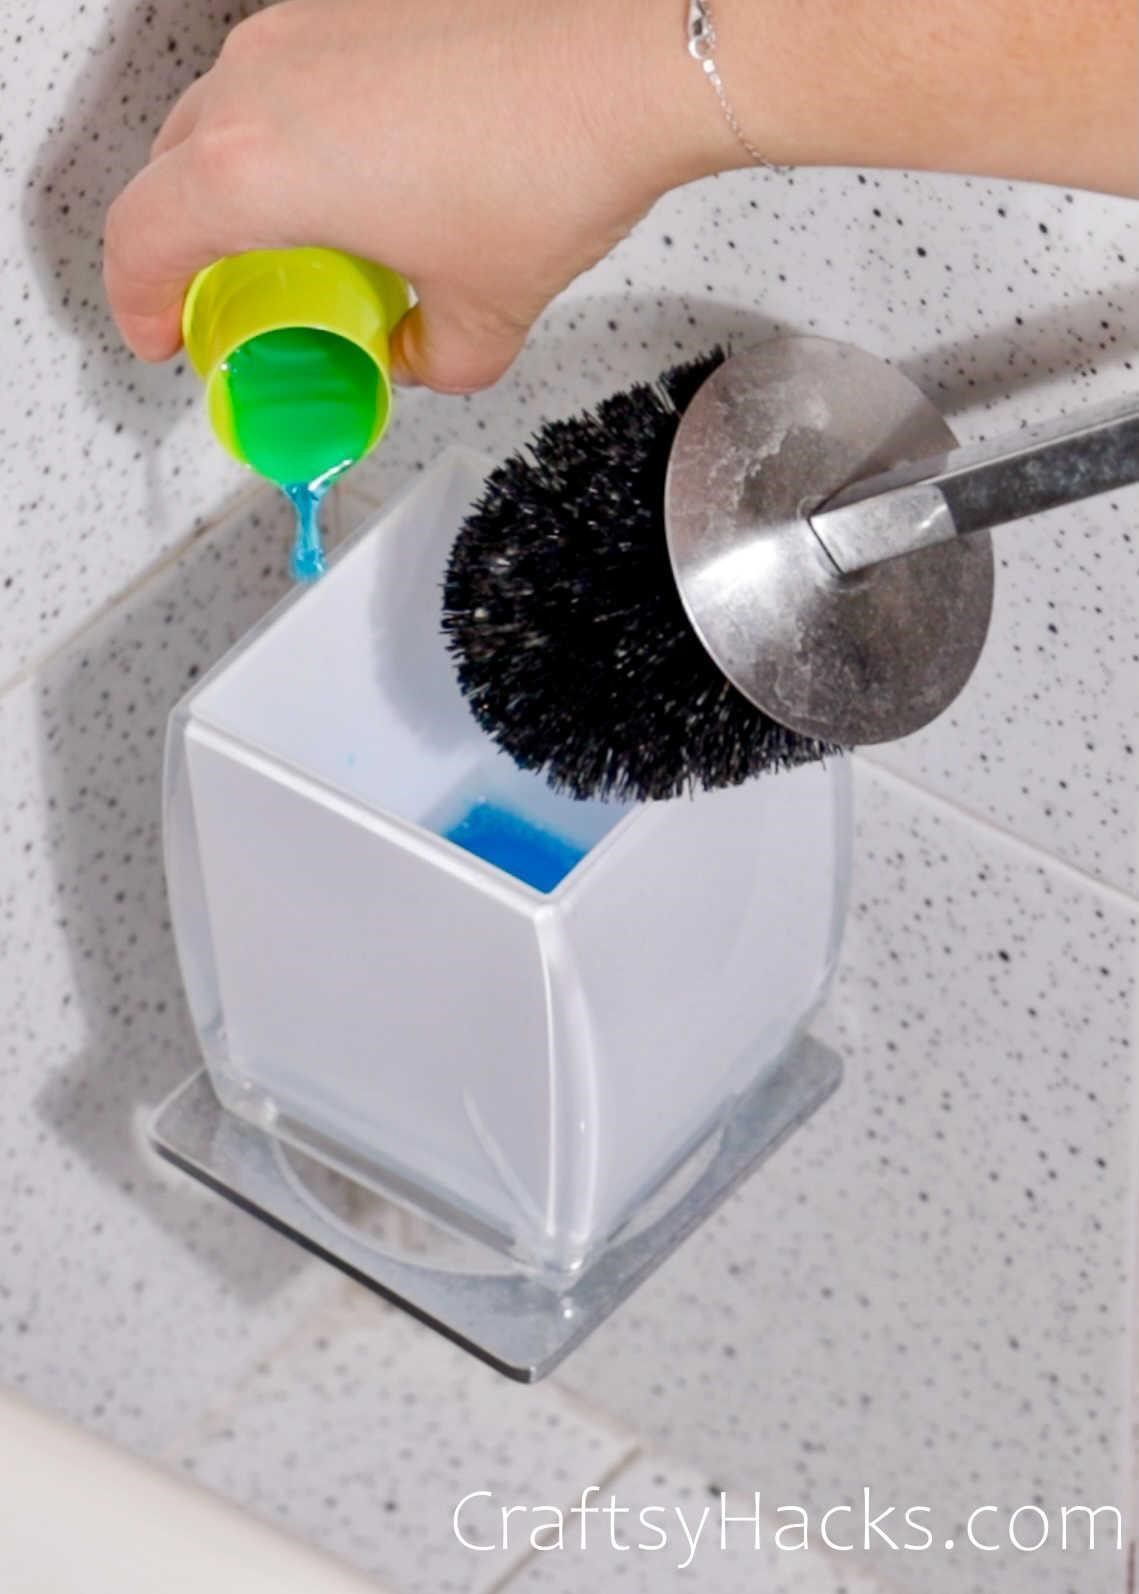 soak toilet brush with favorite cleaner